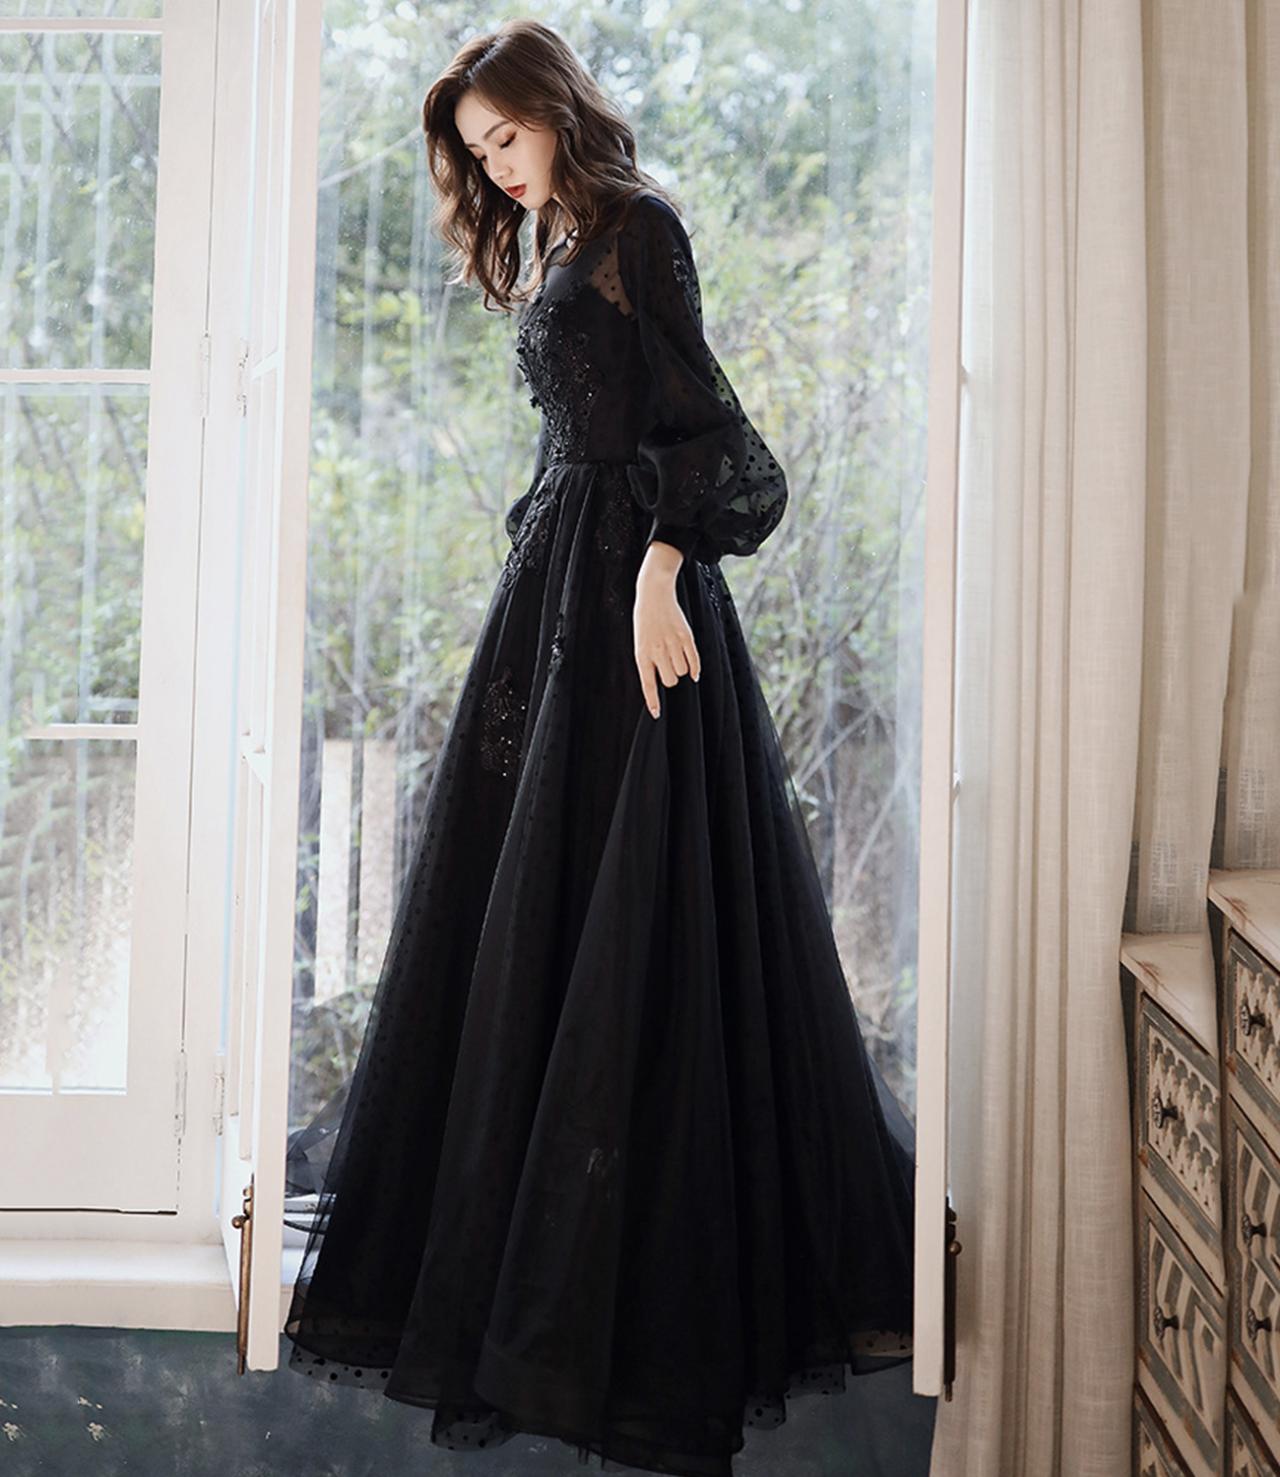 Black Tulle Lace Long Prom Dress Black Evening Dress